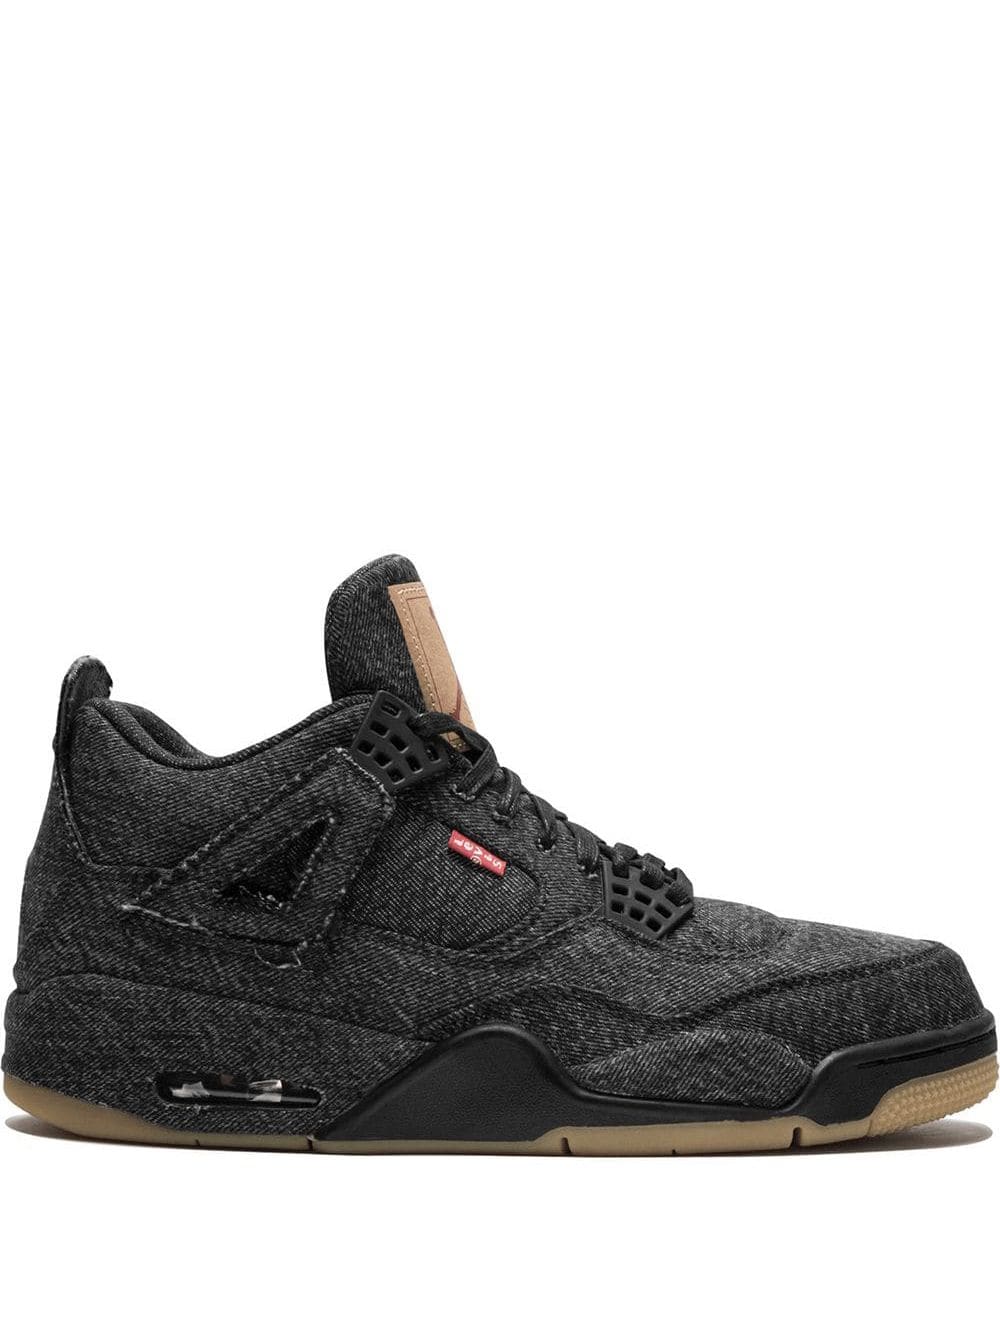 Jordan x Levi's Air Jordan 4 Retro NRG "Black Levis" sneakers von Jordan